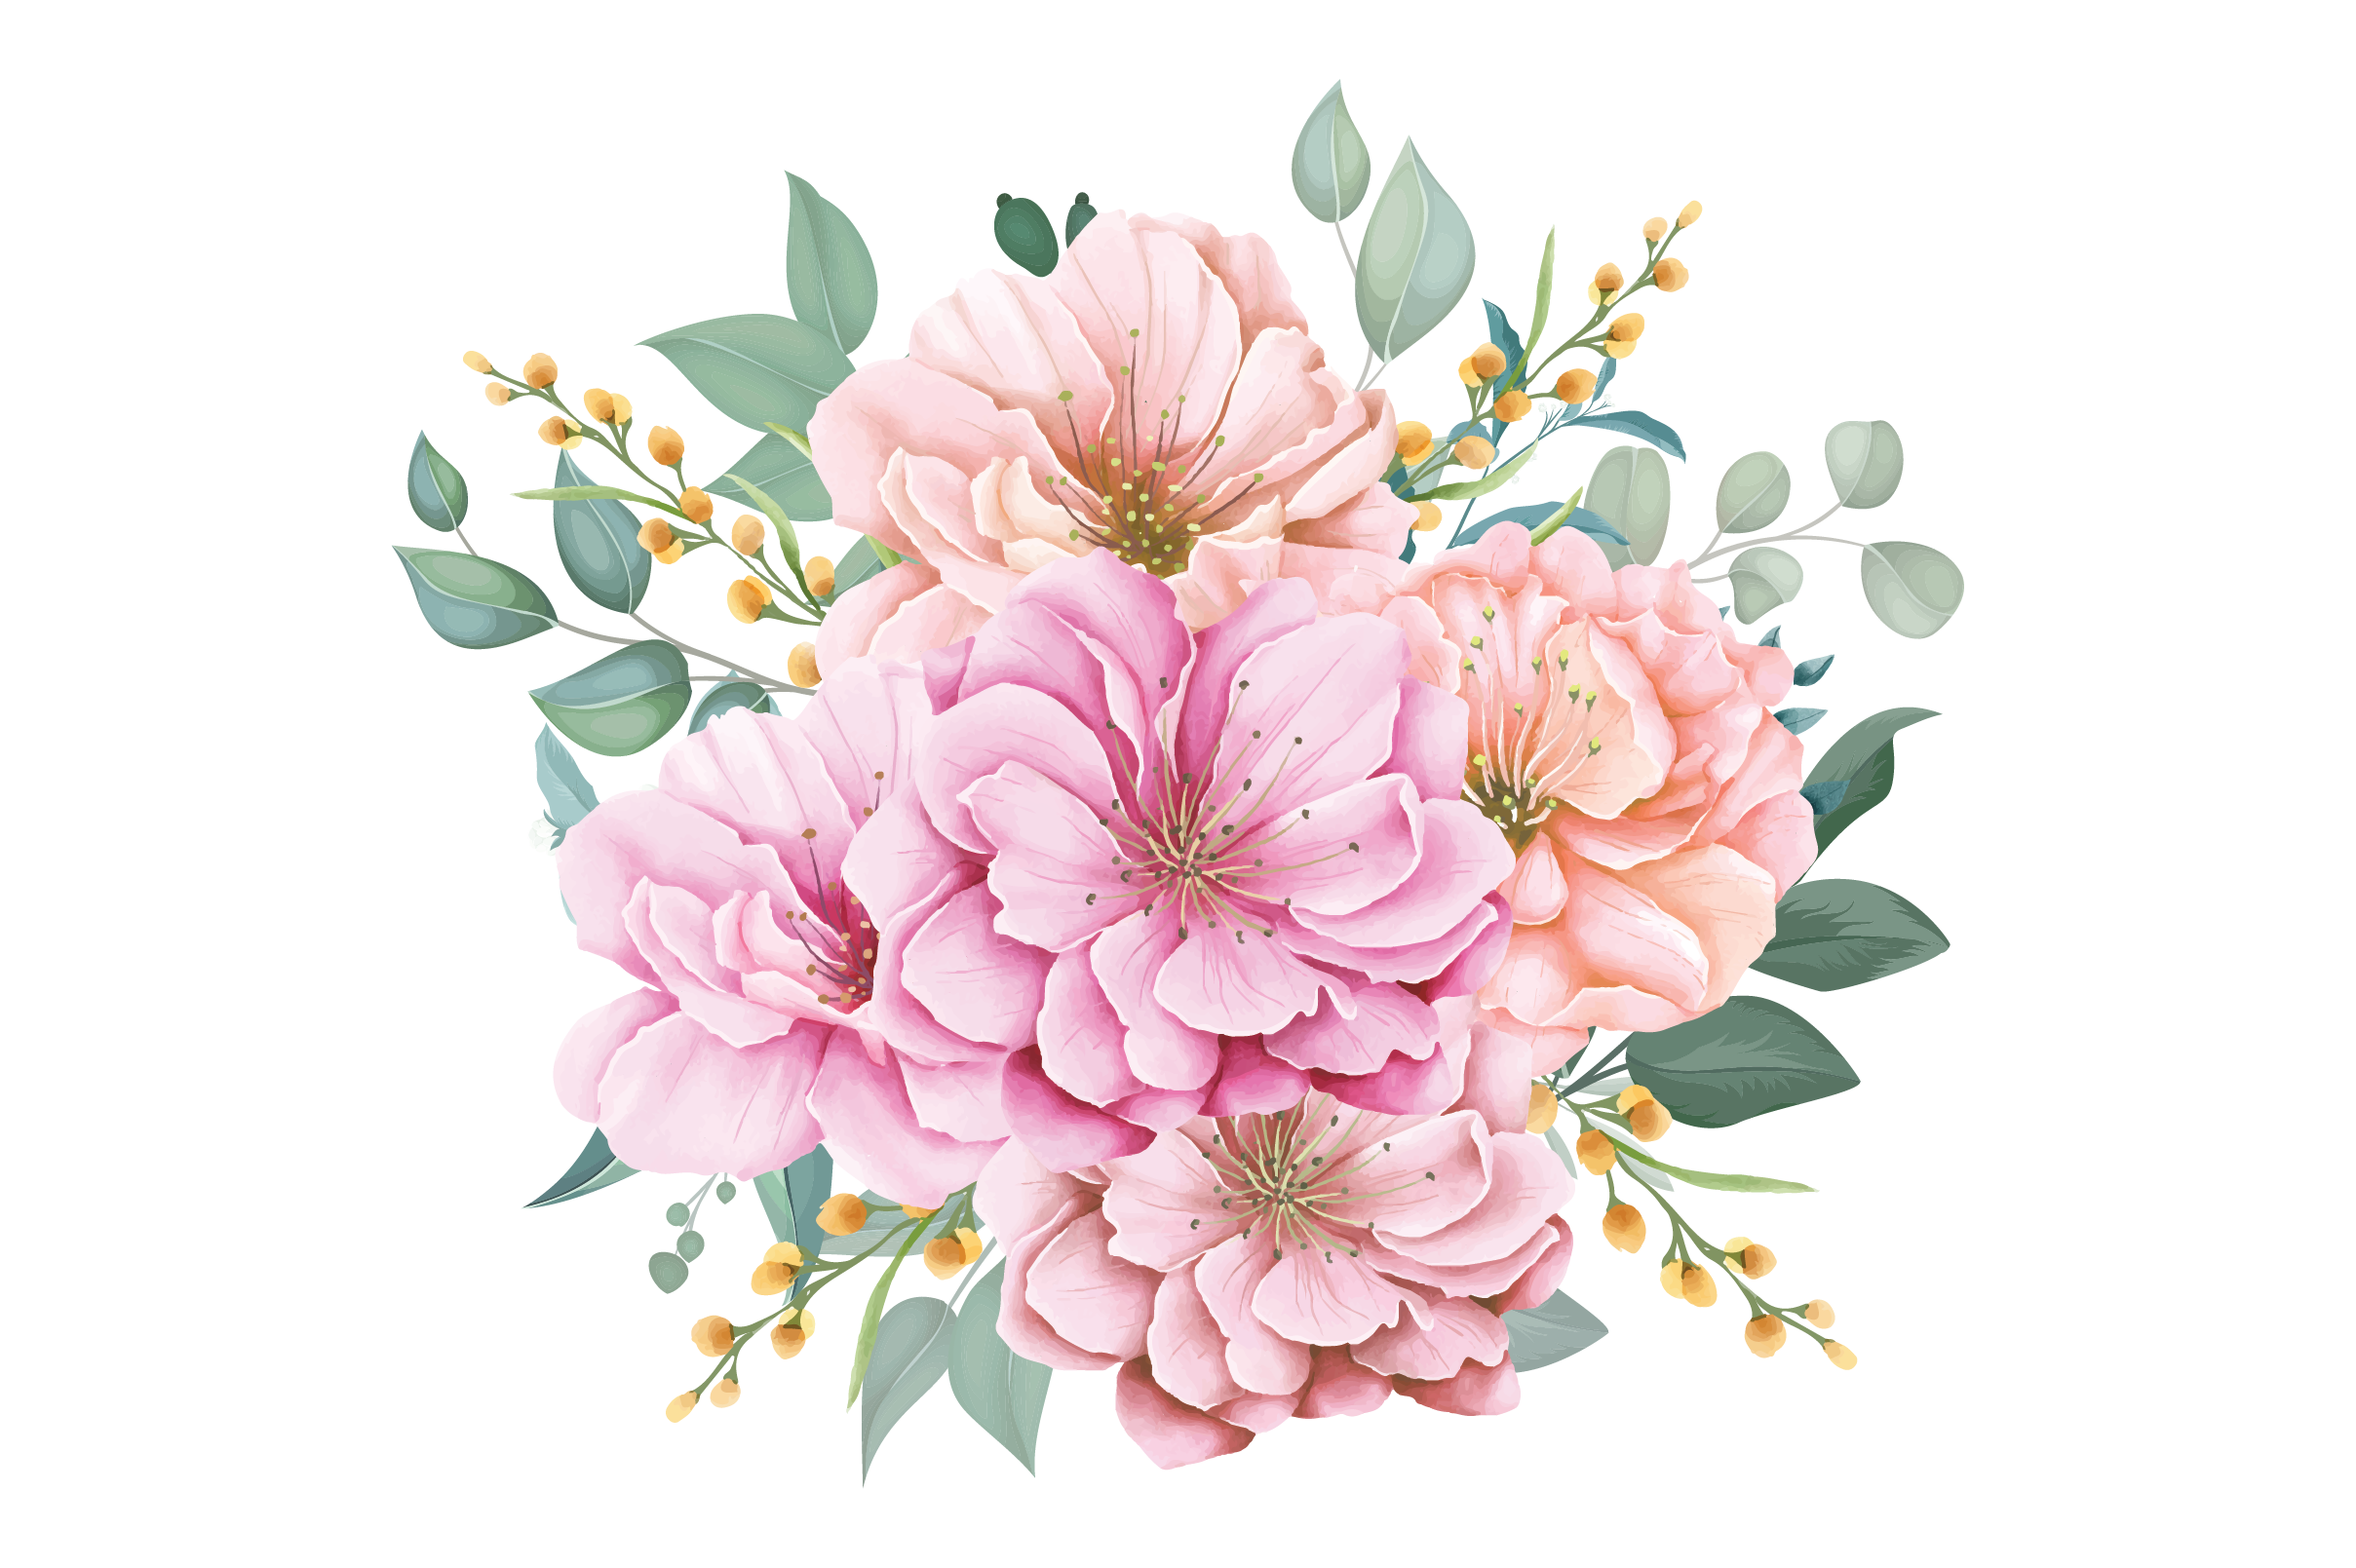 Flowers Watercolor Vector Illustration Illustration par aekblahareda ...